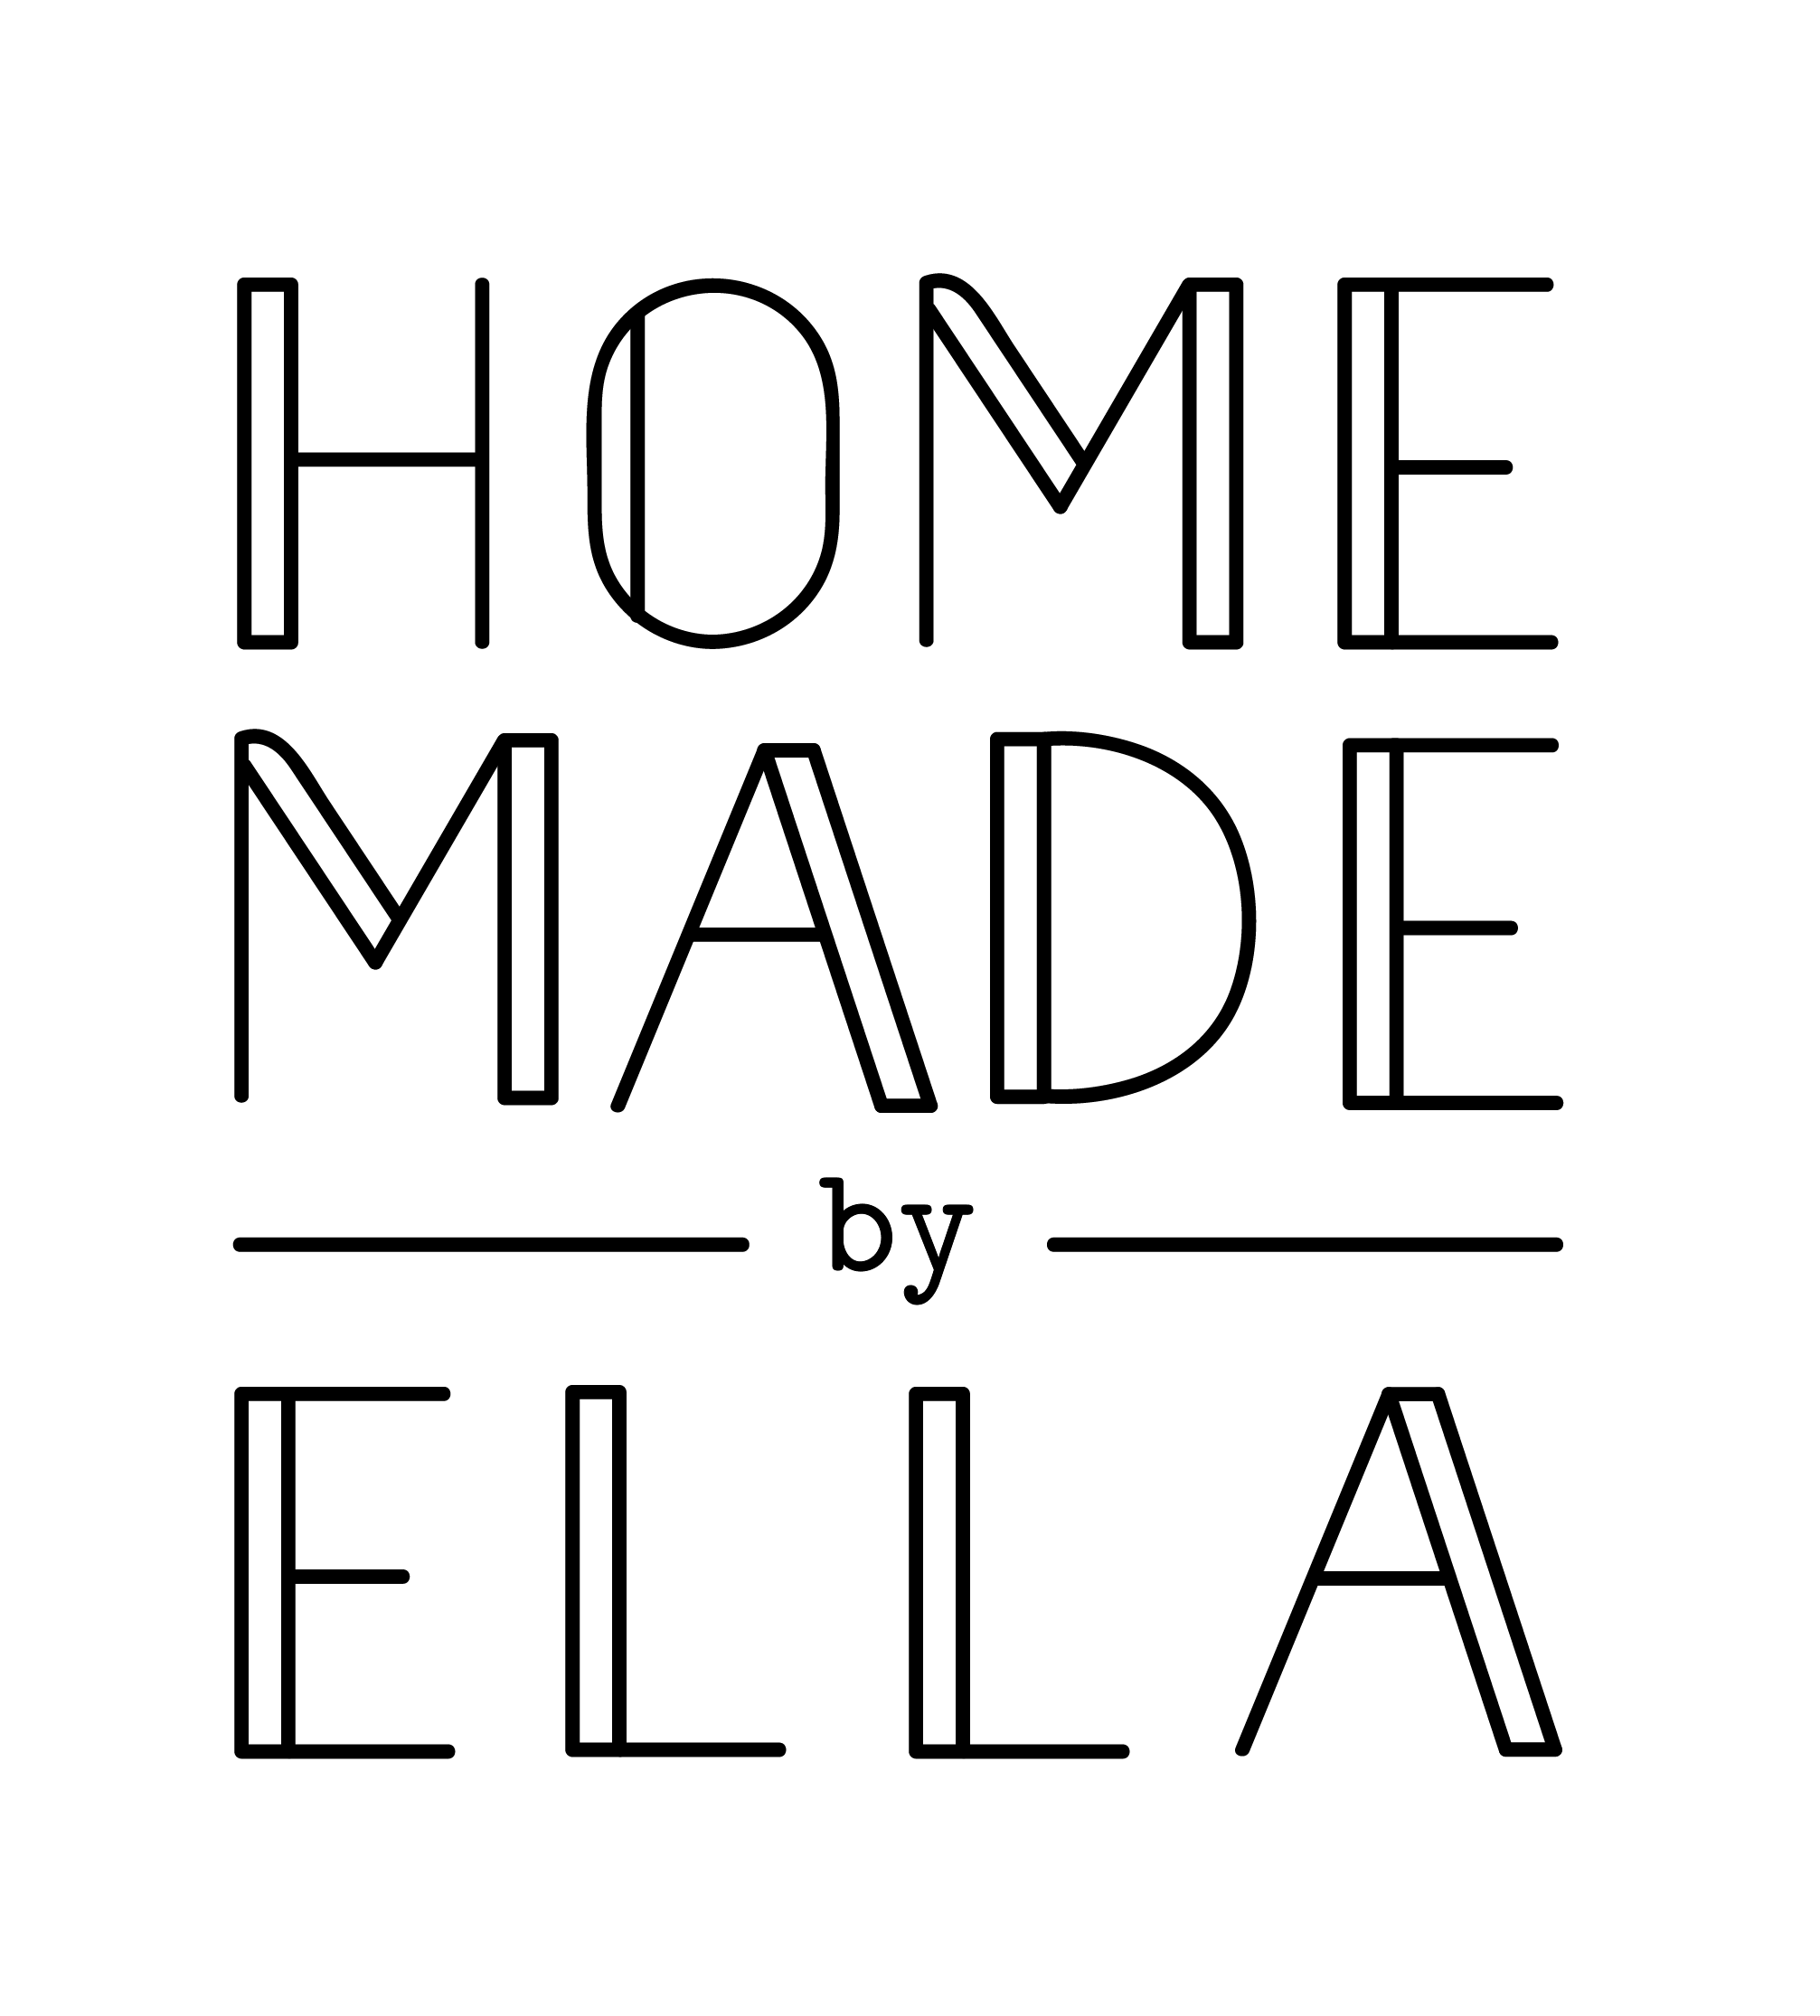 Homemade by Ella